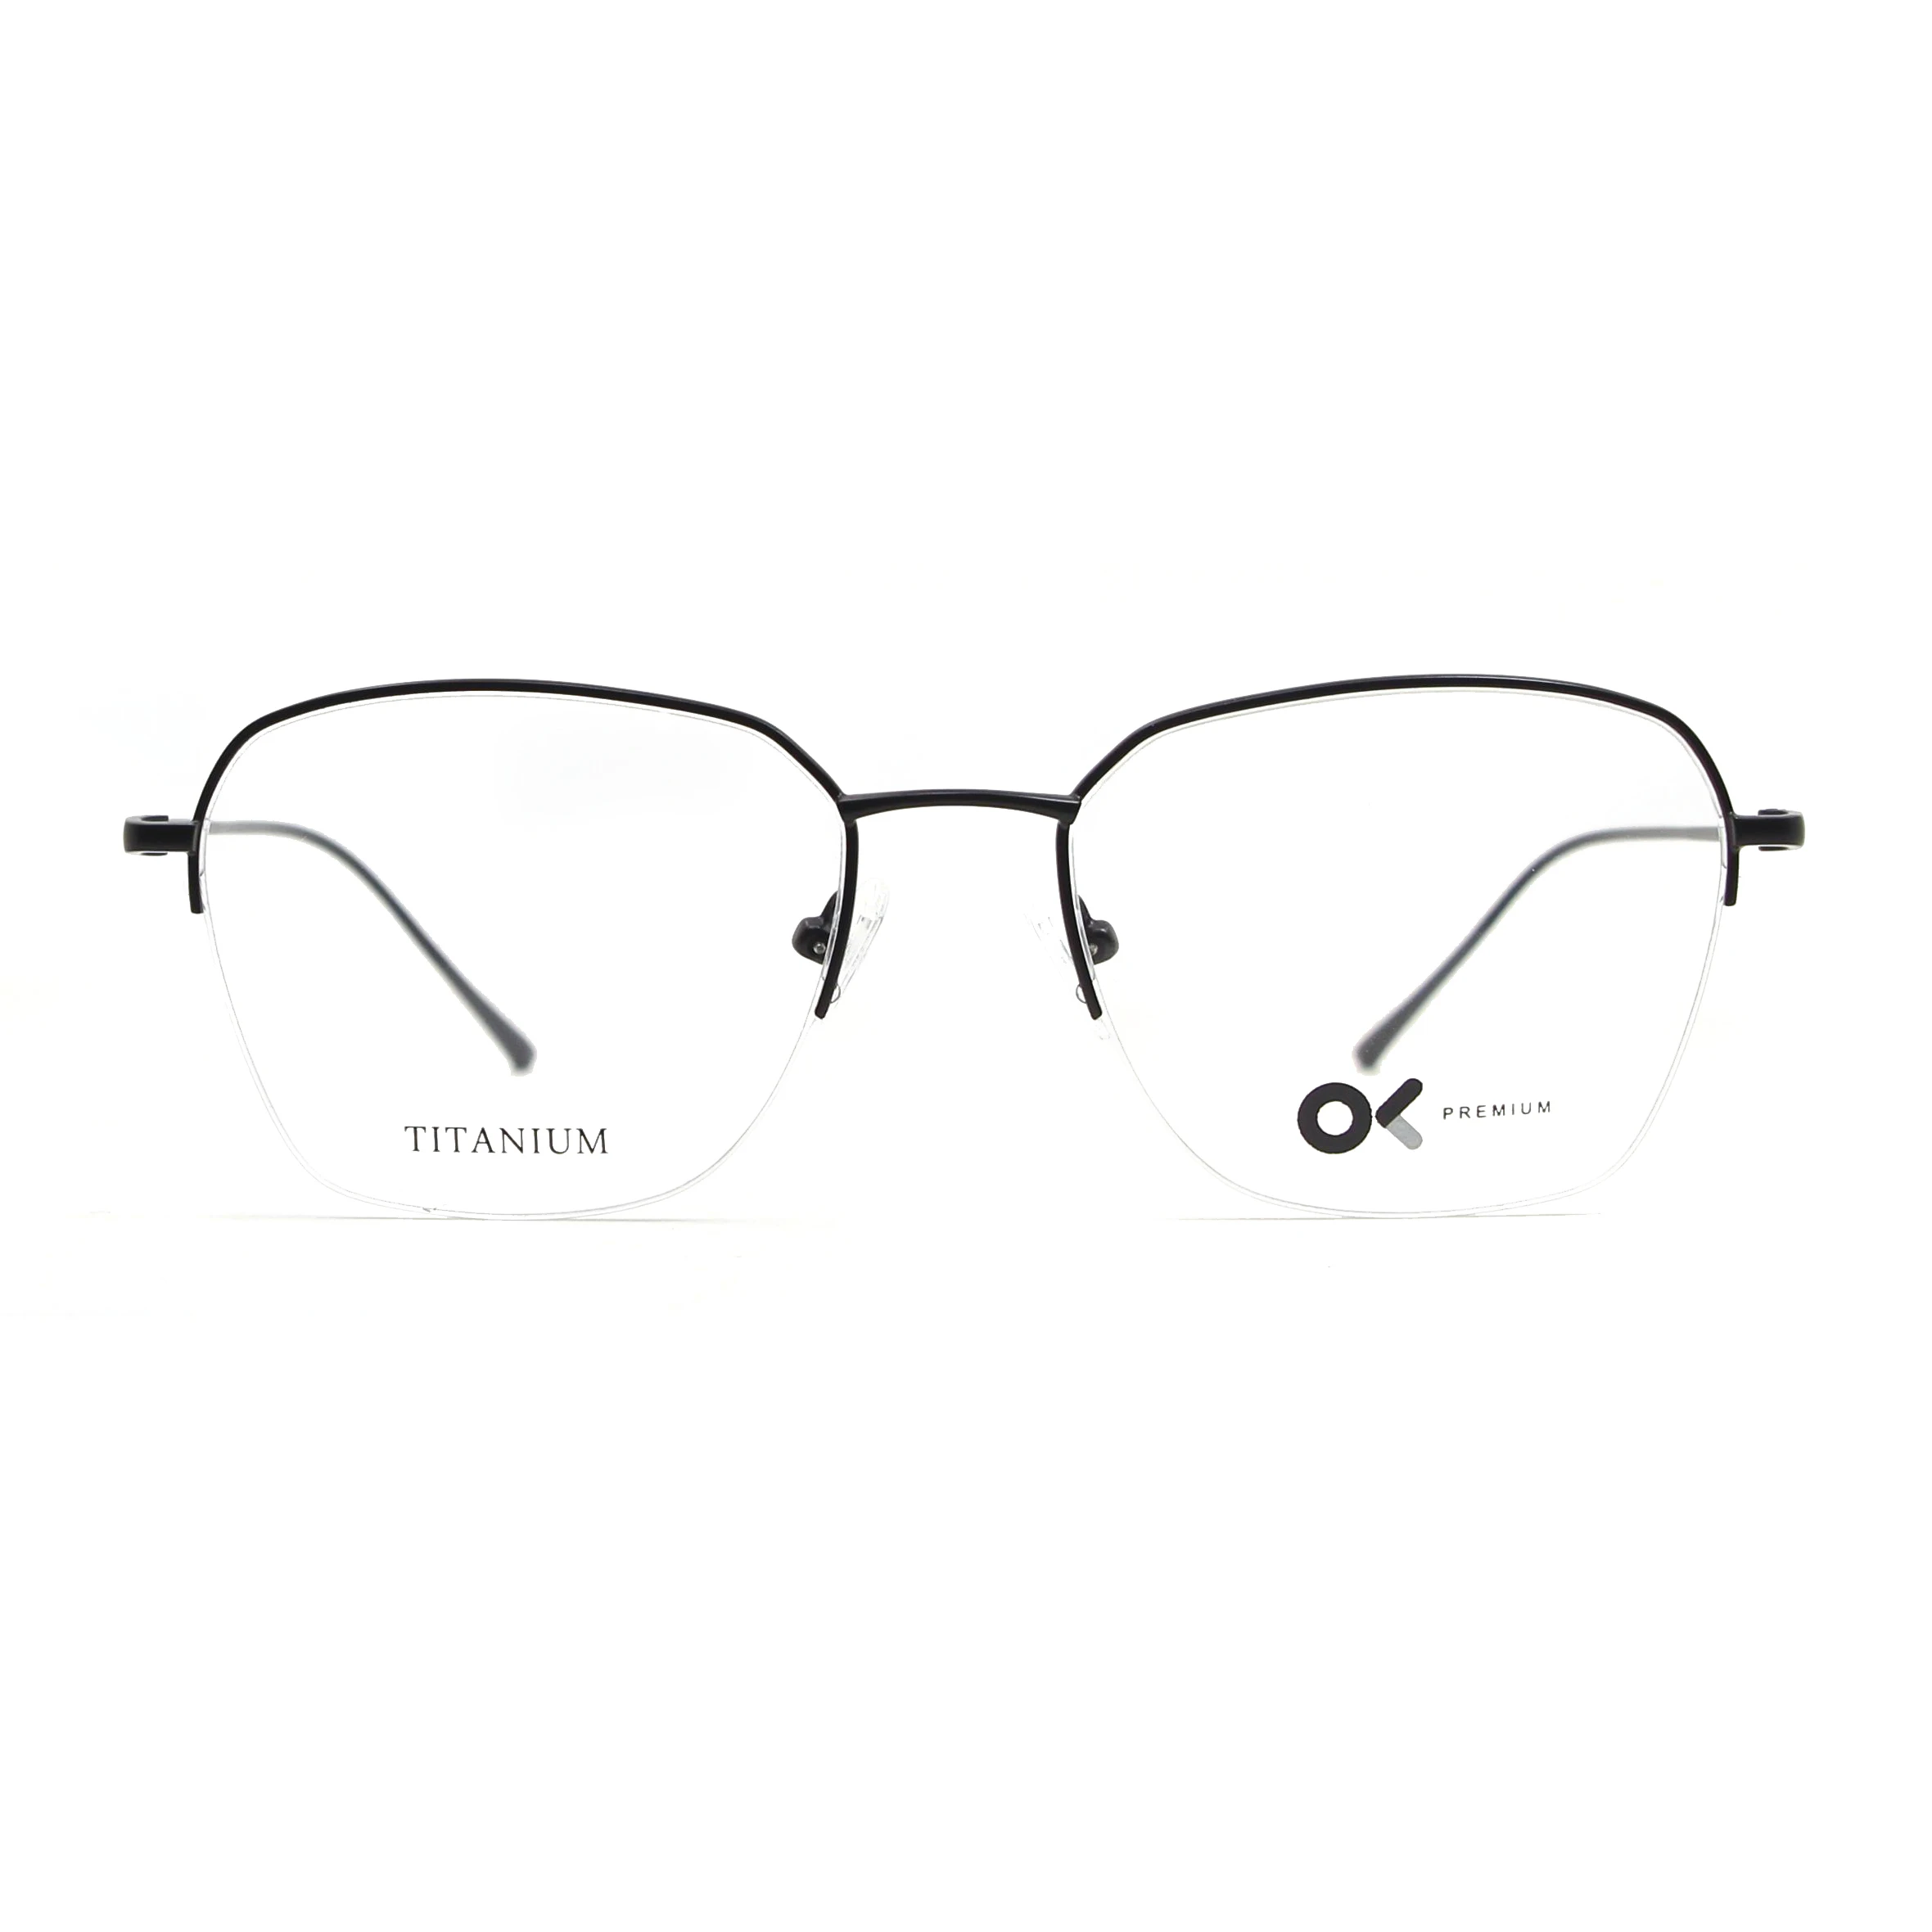 

IP99104 Hot semi-rimless optical glasses titanium frame china manufacturer occhiali, 4 colors